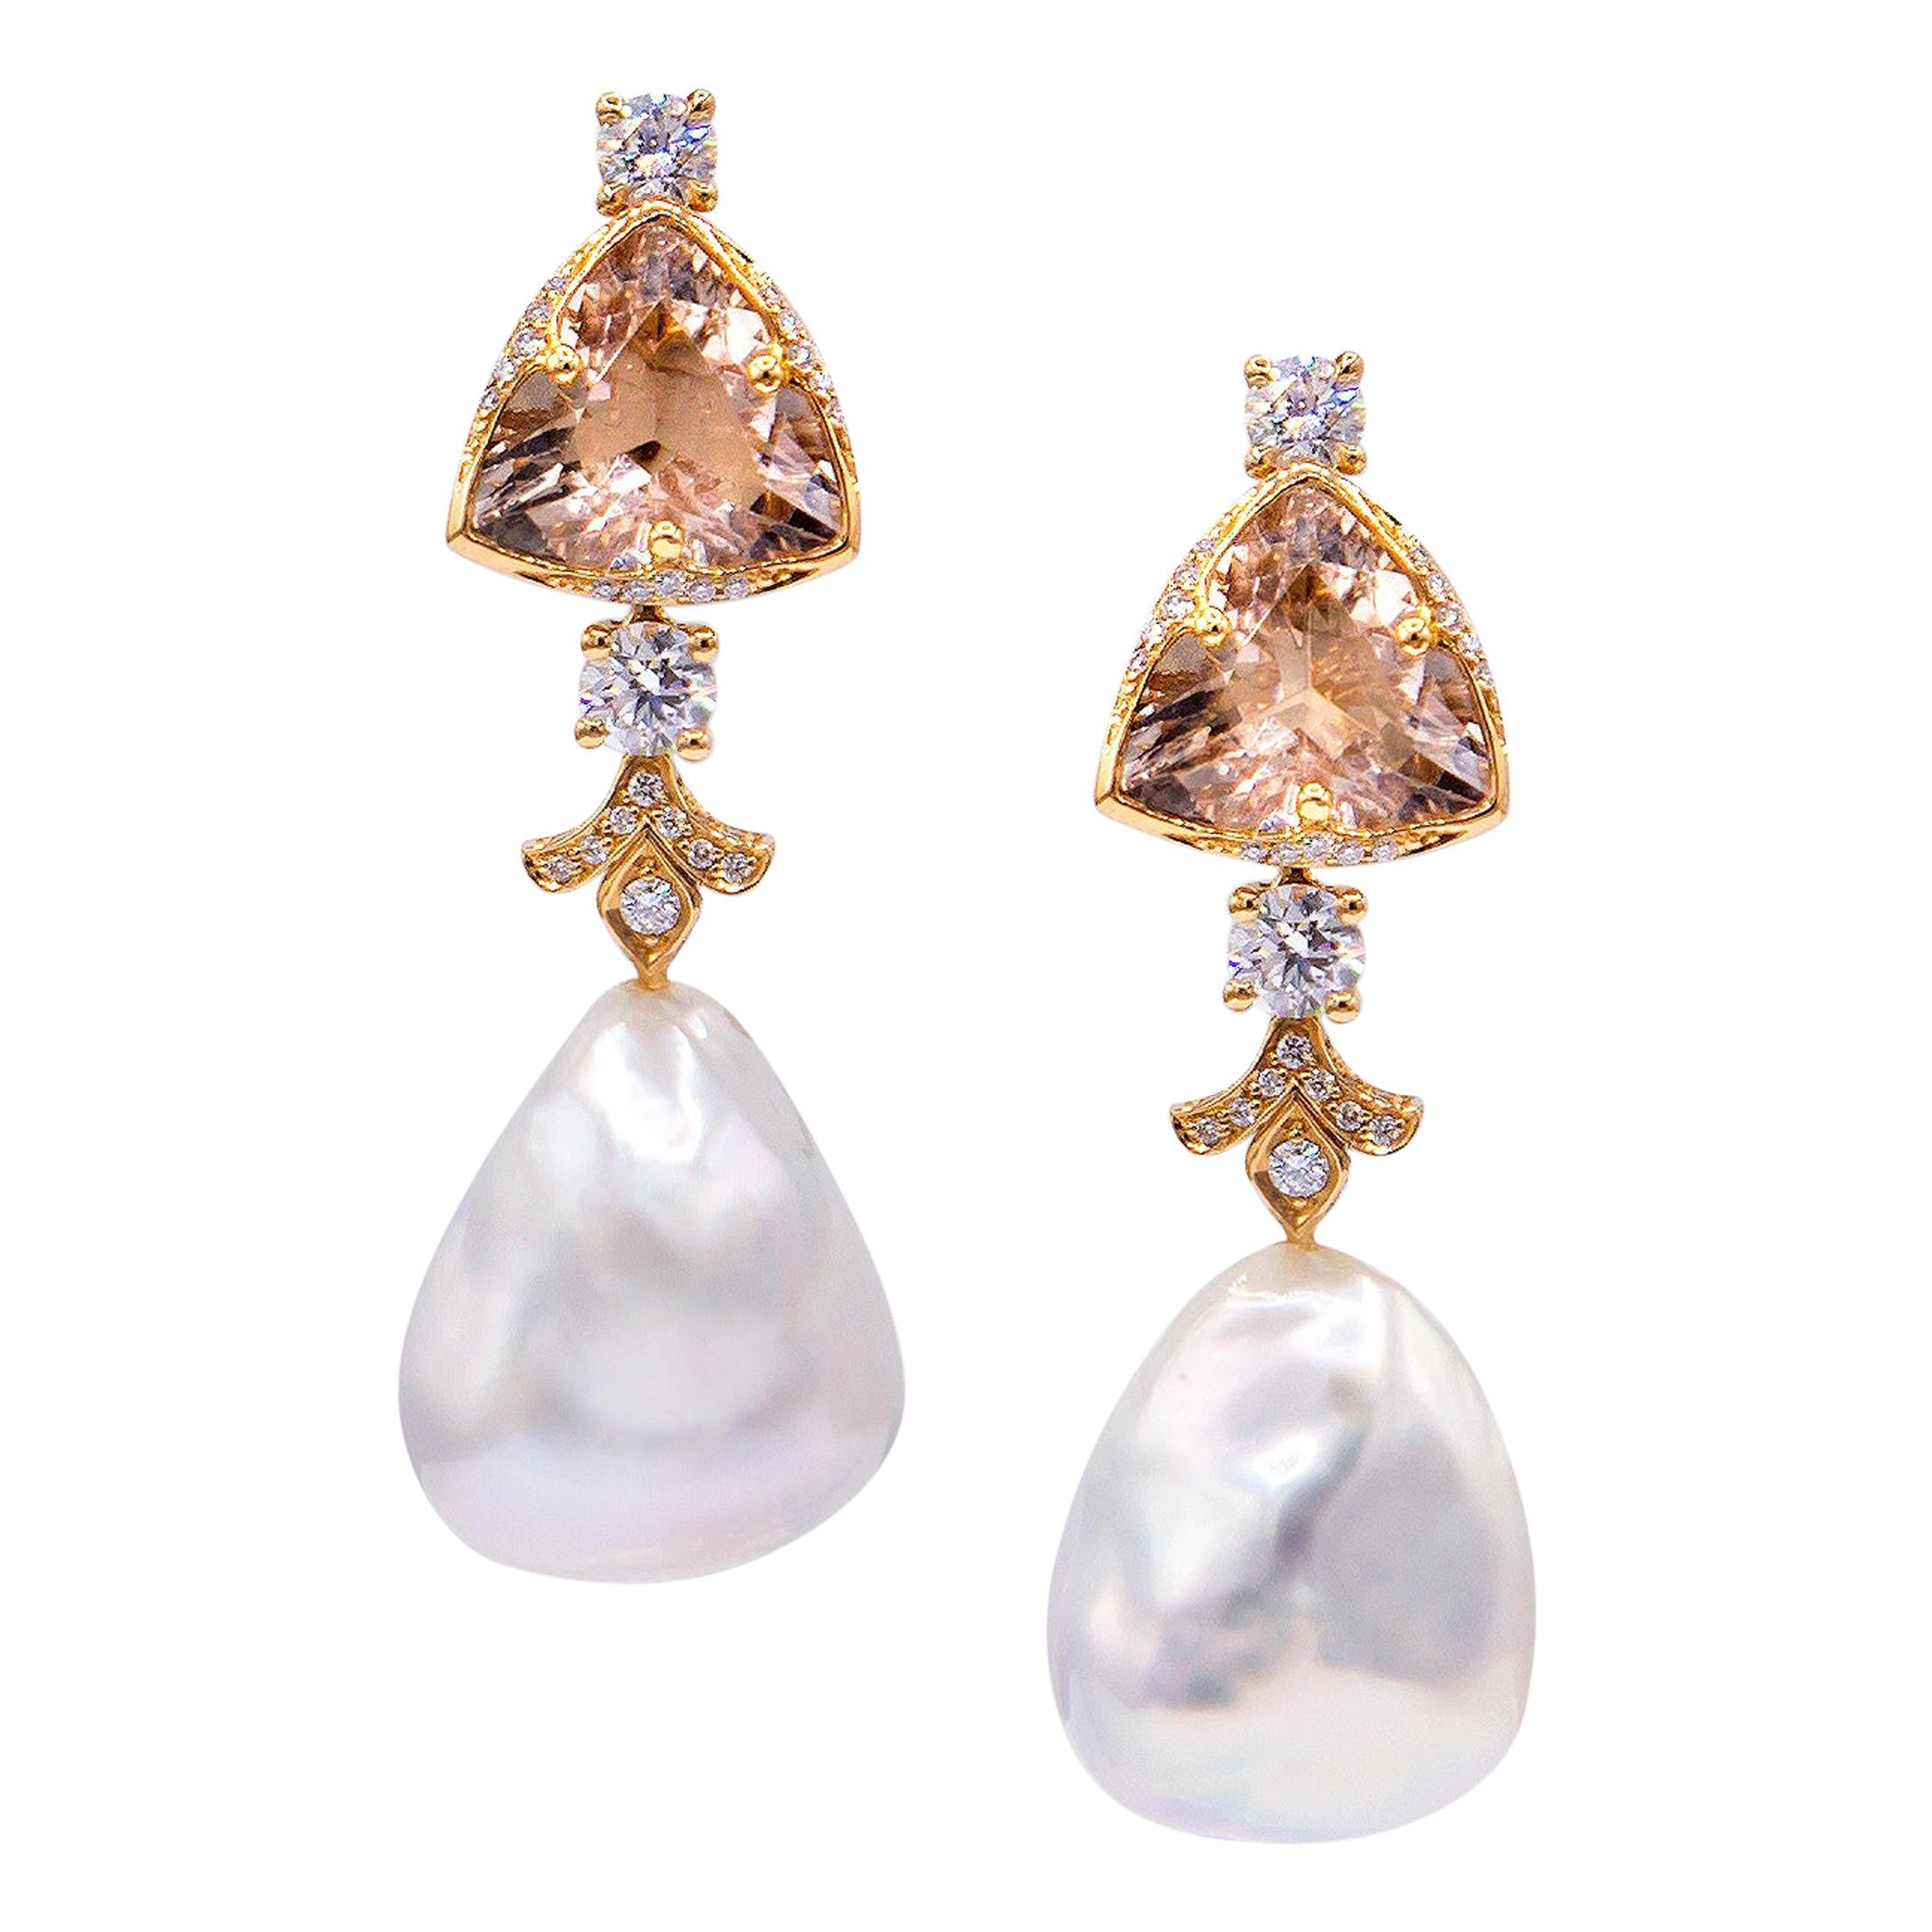 Boucles d'oreilles en or rose 18 carats, diamants, morganites et perles